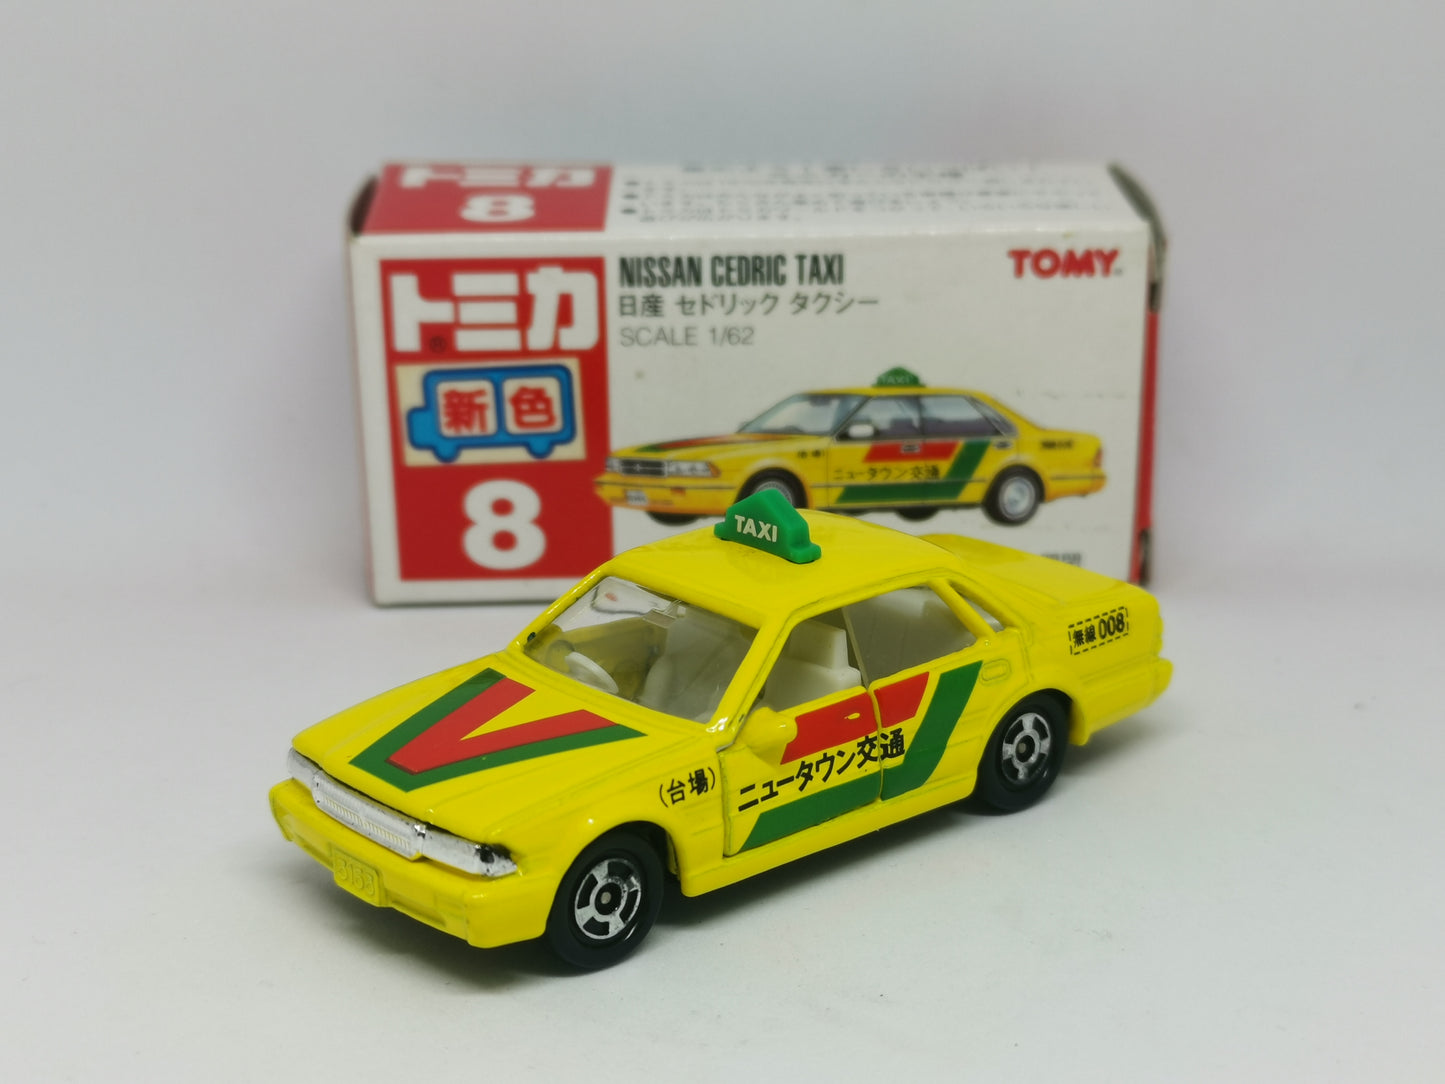 Tomica #8 Nissan Cedric Taxi